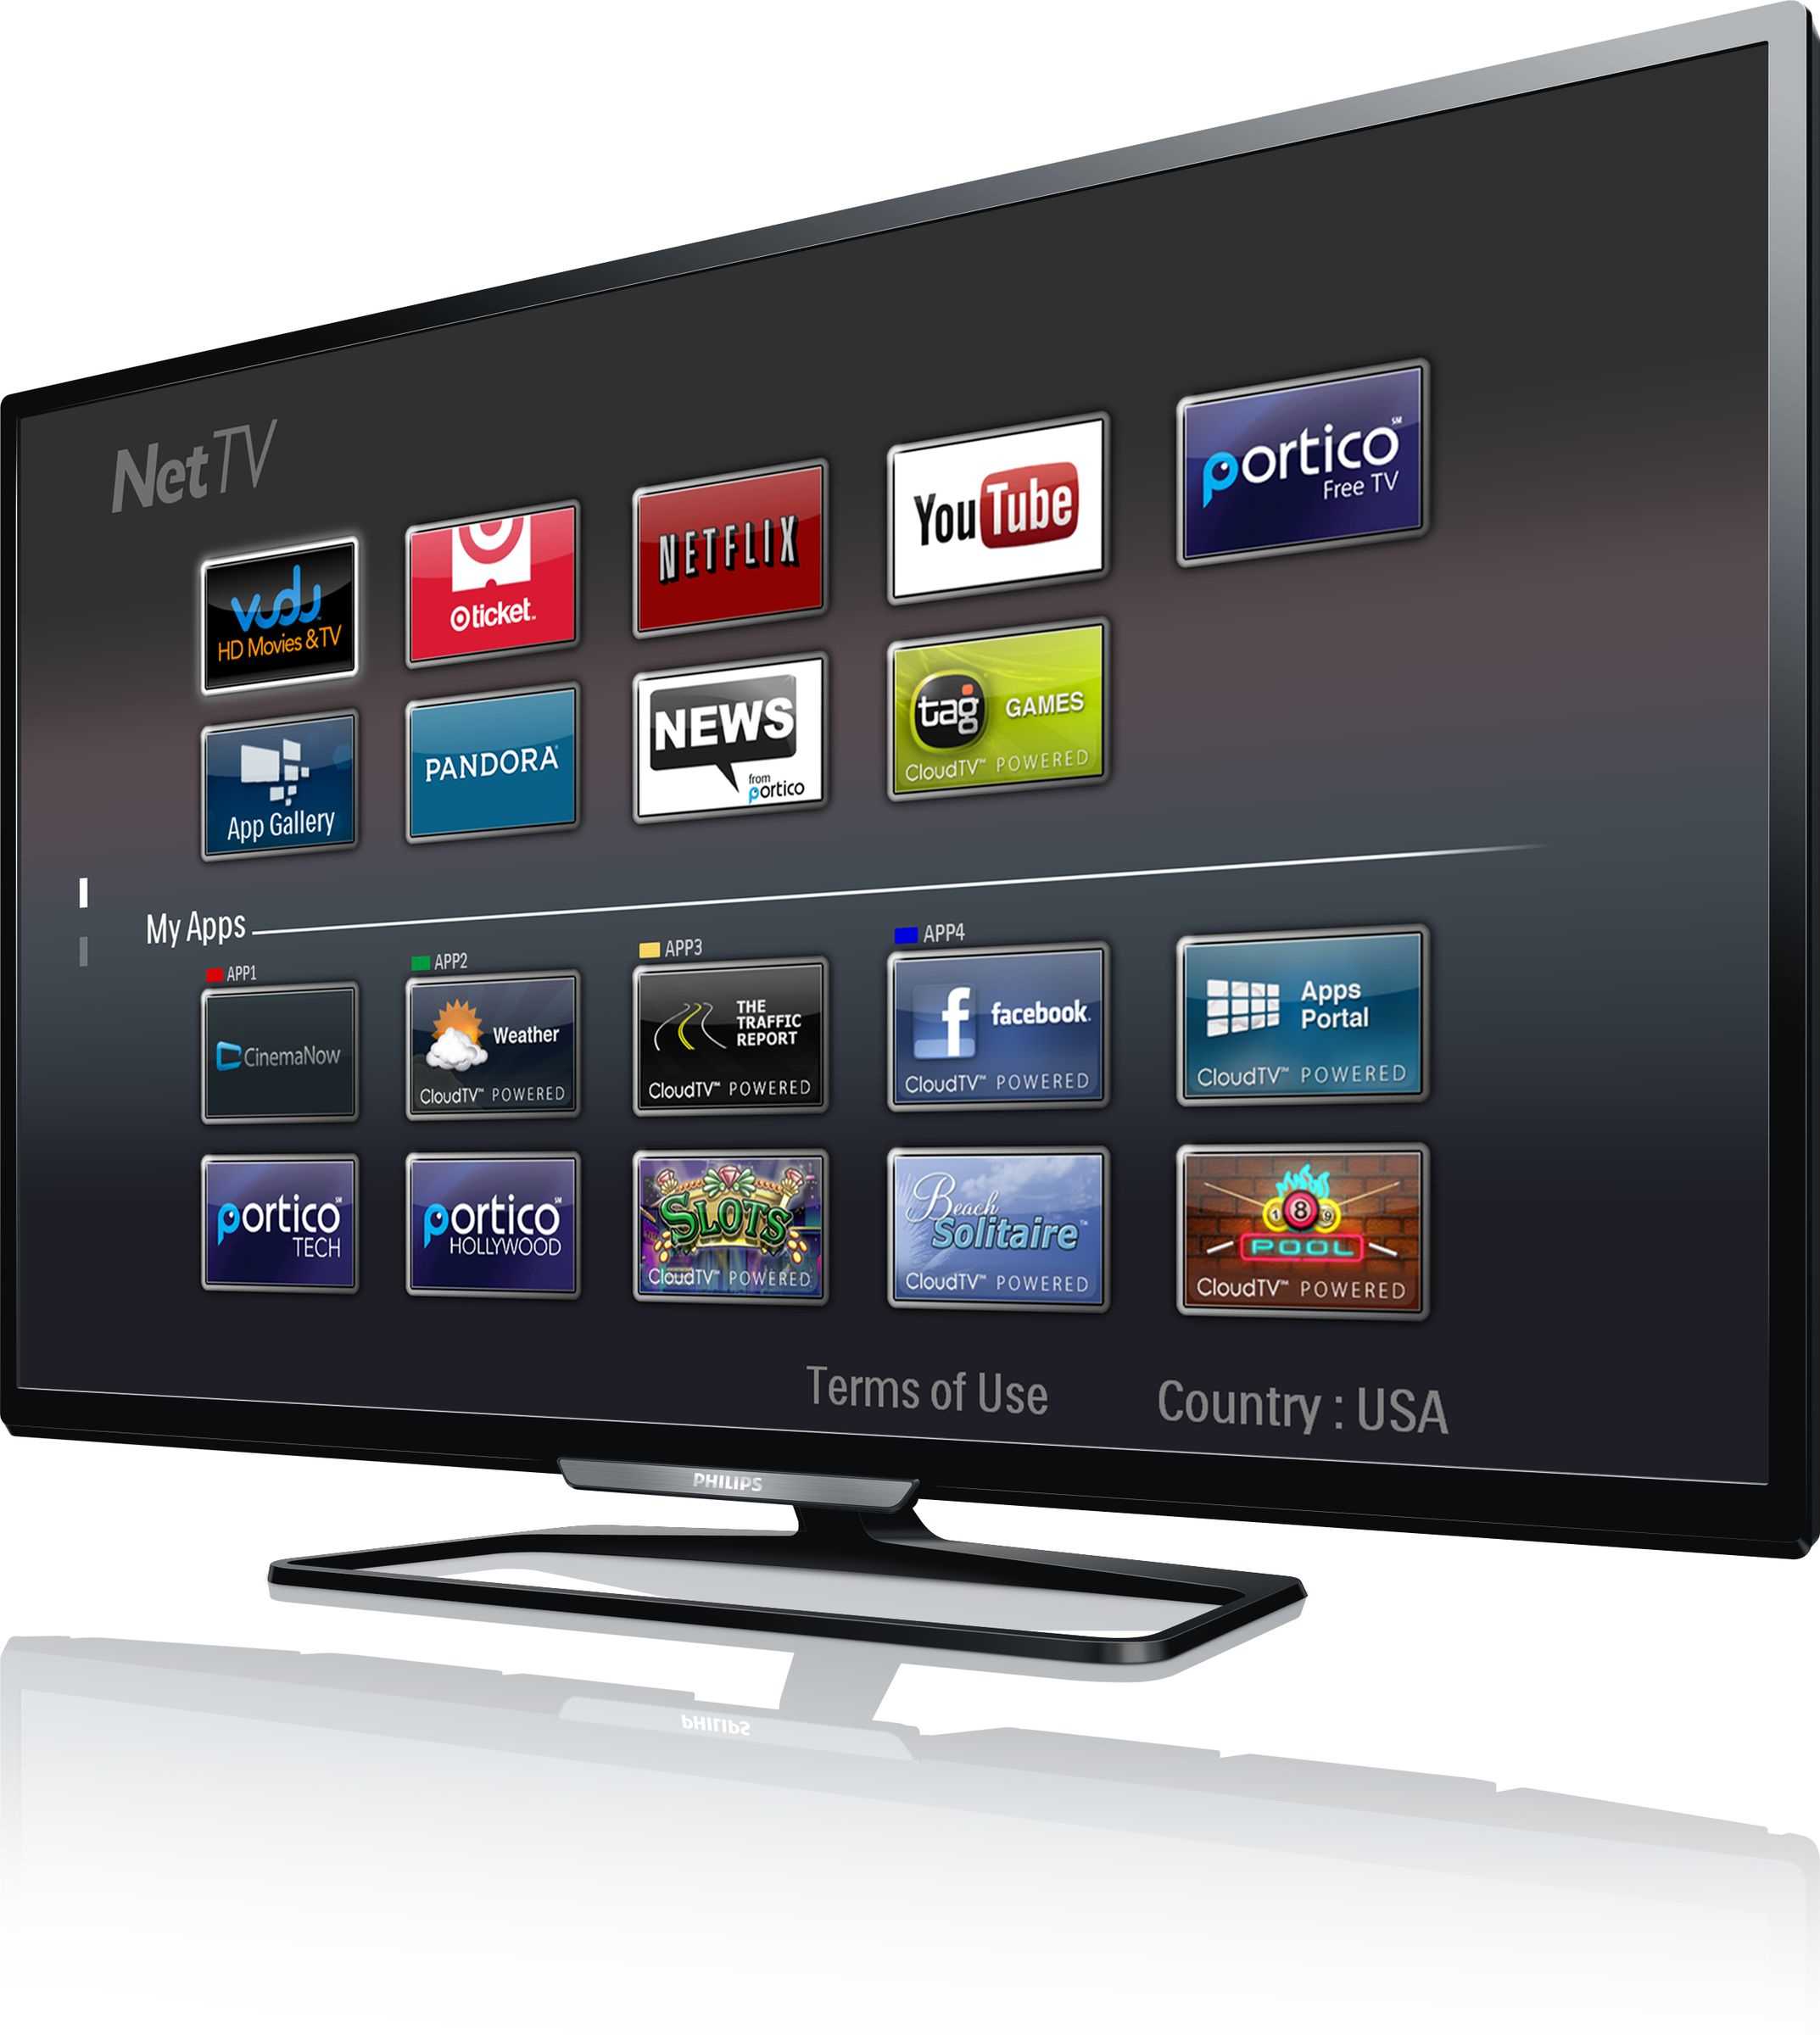 Какие характеристики телевизора имеют значение при выборе smart tv